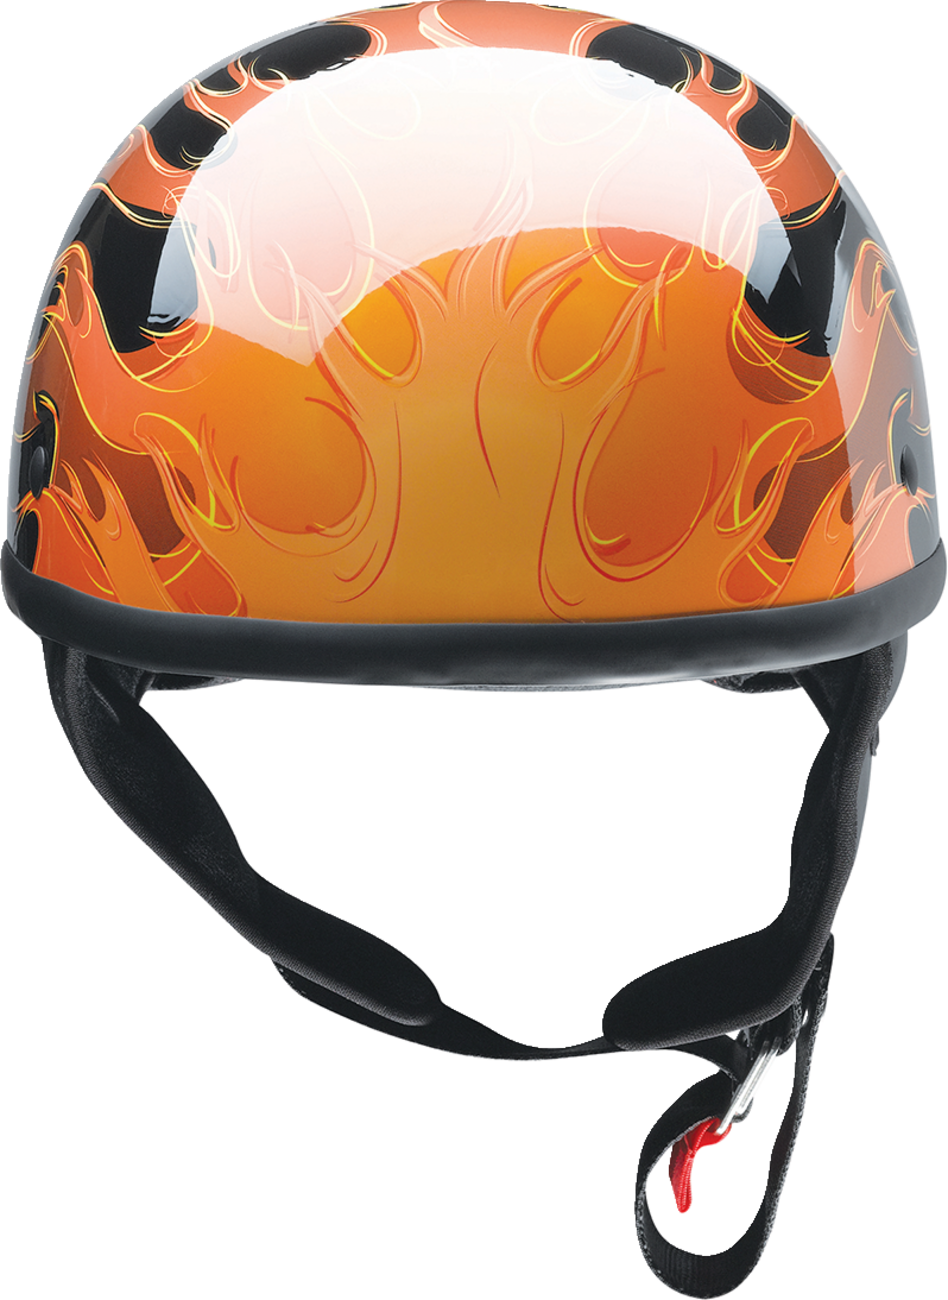 Z1R CC Beanie Helmet - Hellfire - Orange - Large 0103-1348